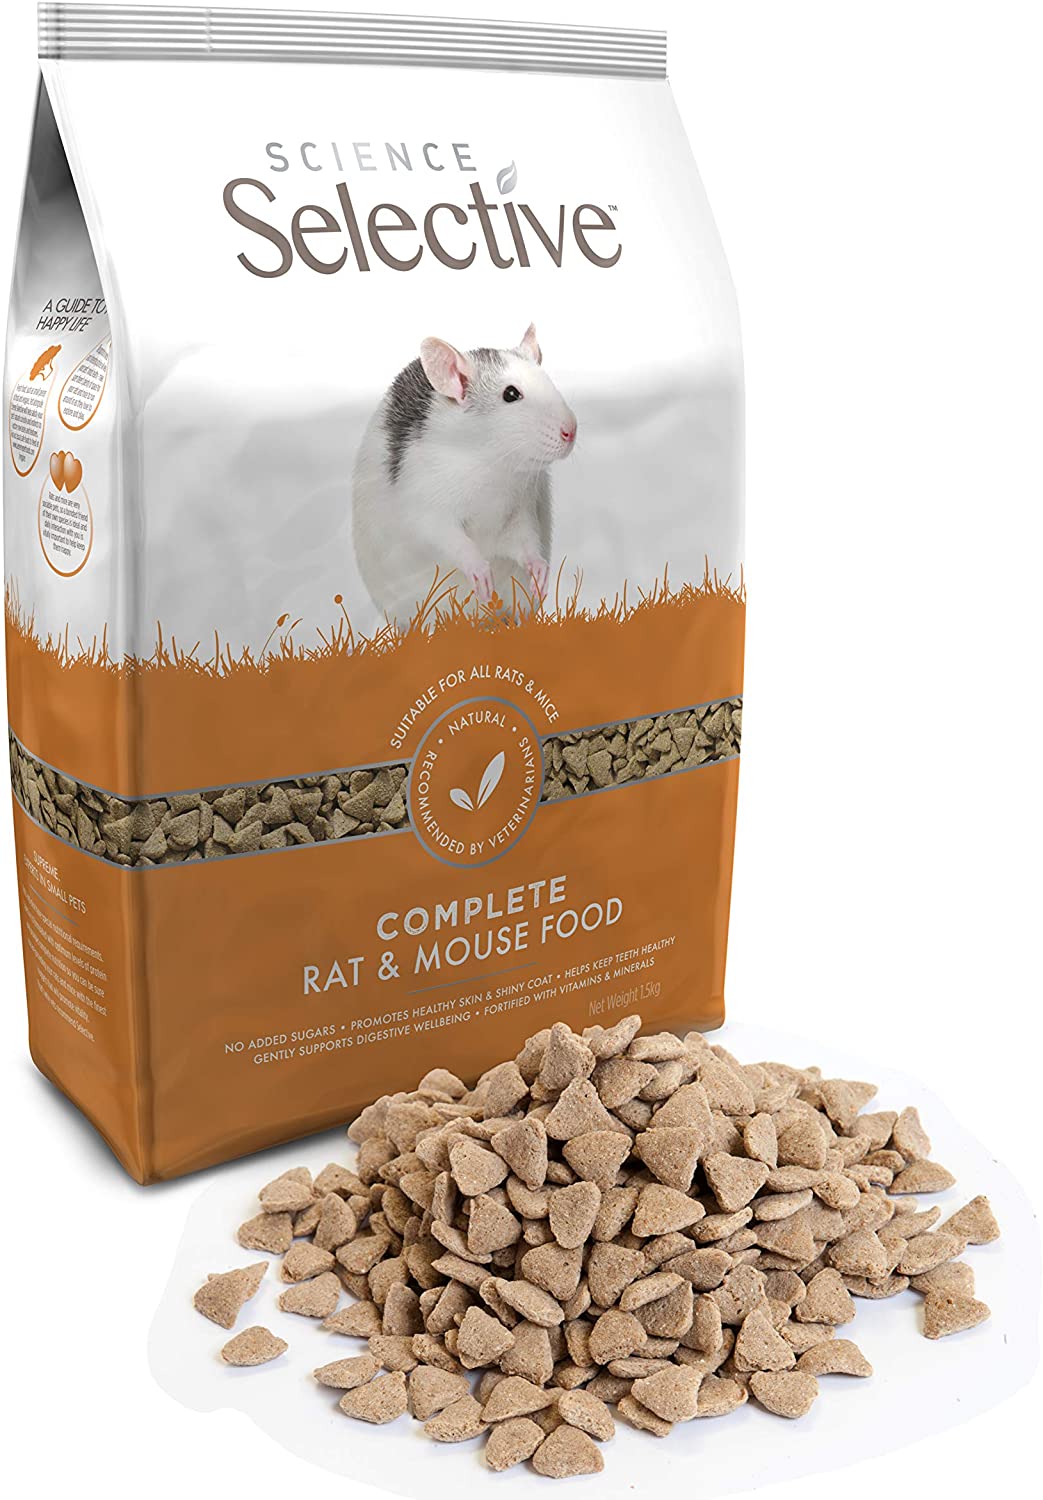  Supreme Petfoods Science Selective - Alimento para Ratas (1,5 kg) 